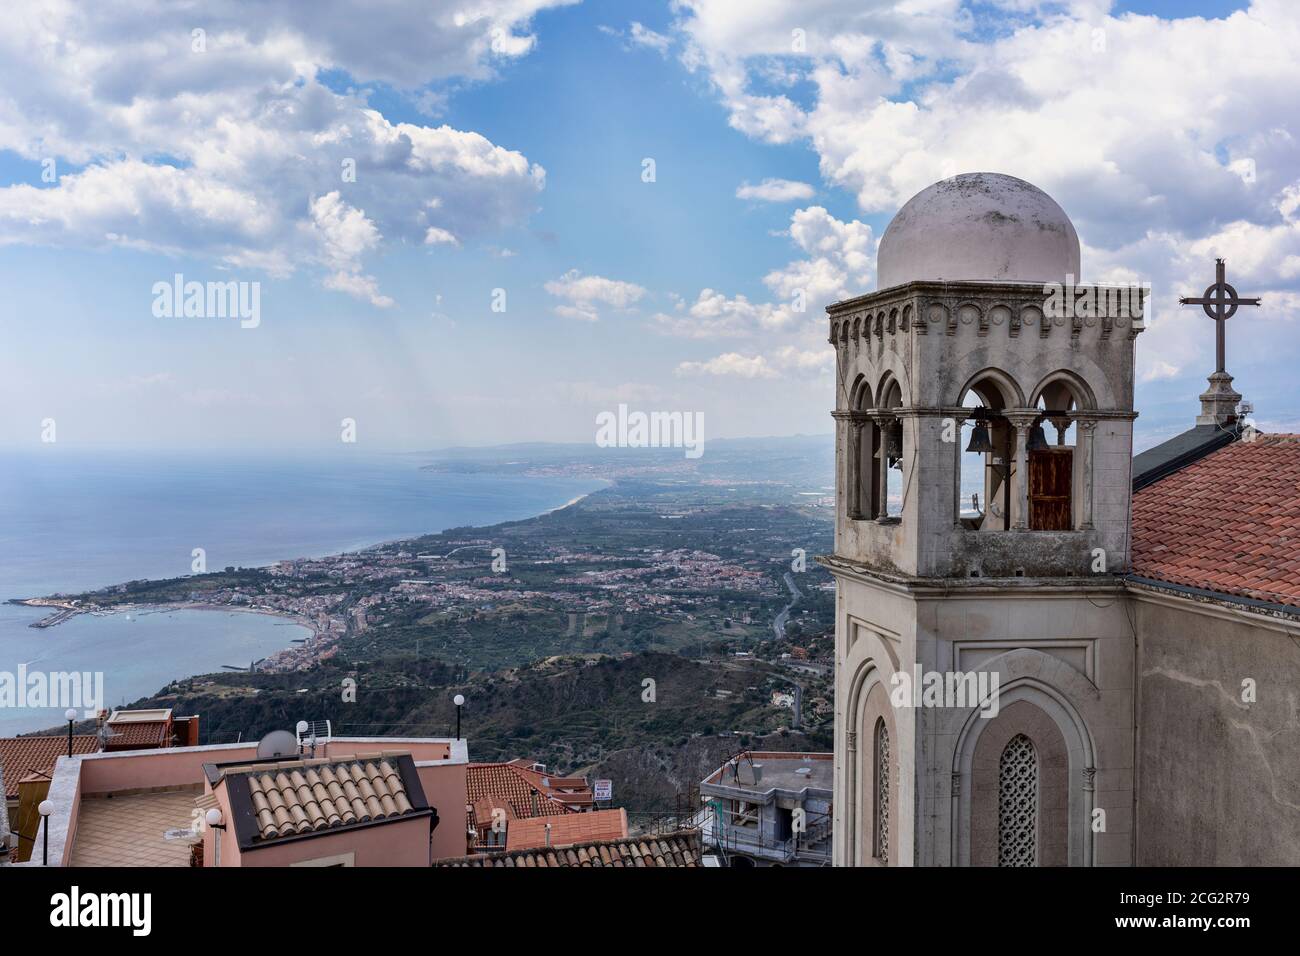 Top of San Niccolo di bari duomo and view of Taormina from Castelmola Stock Photo